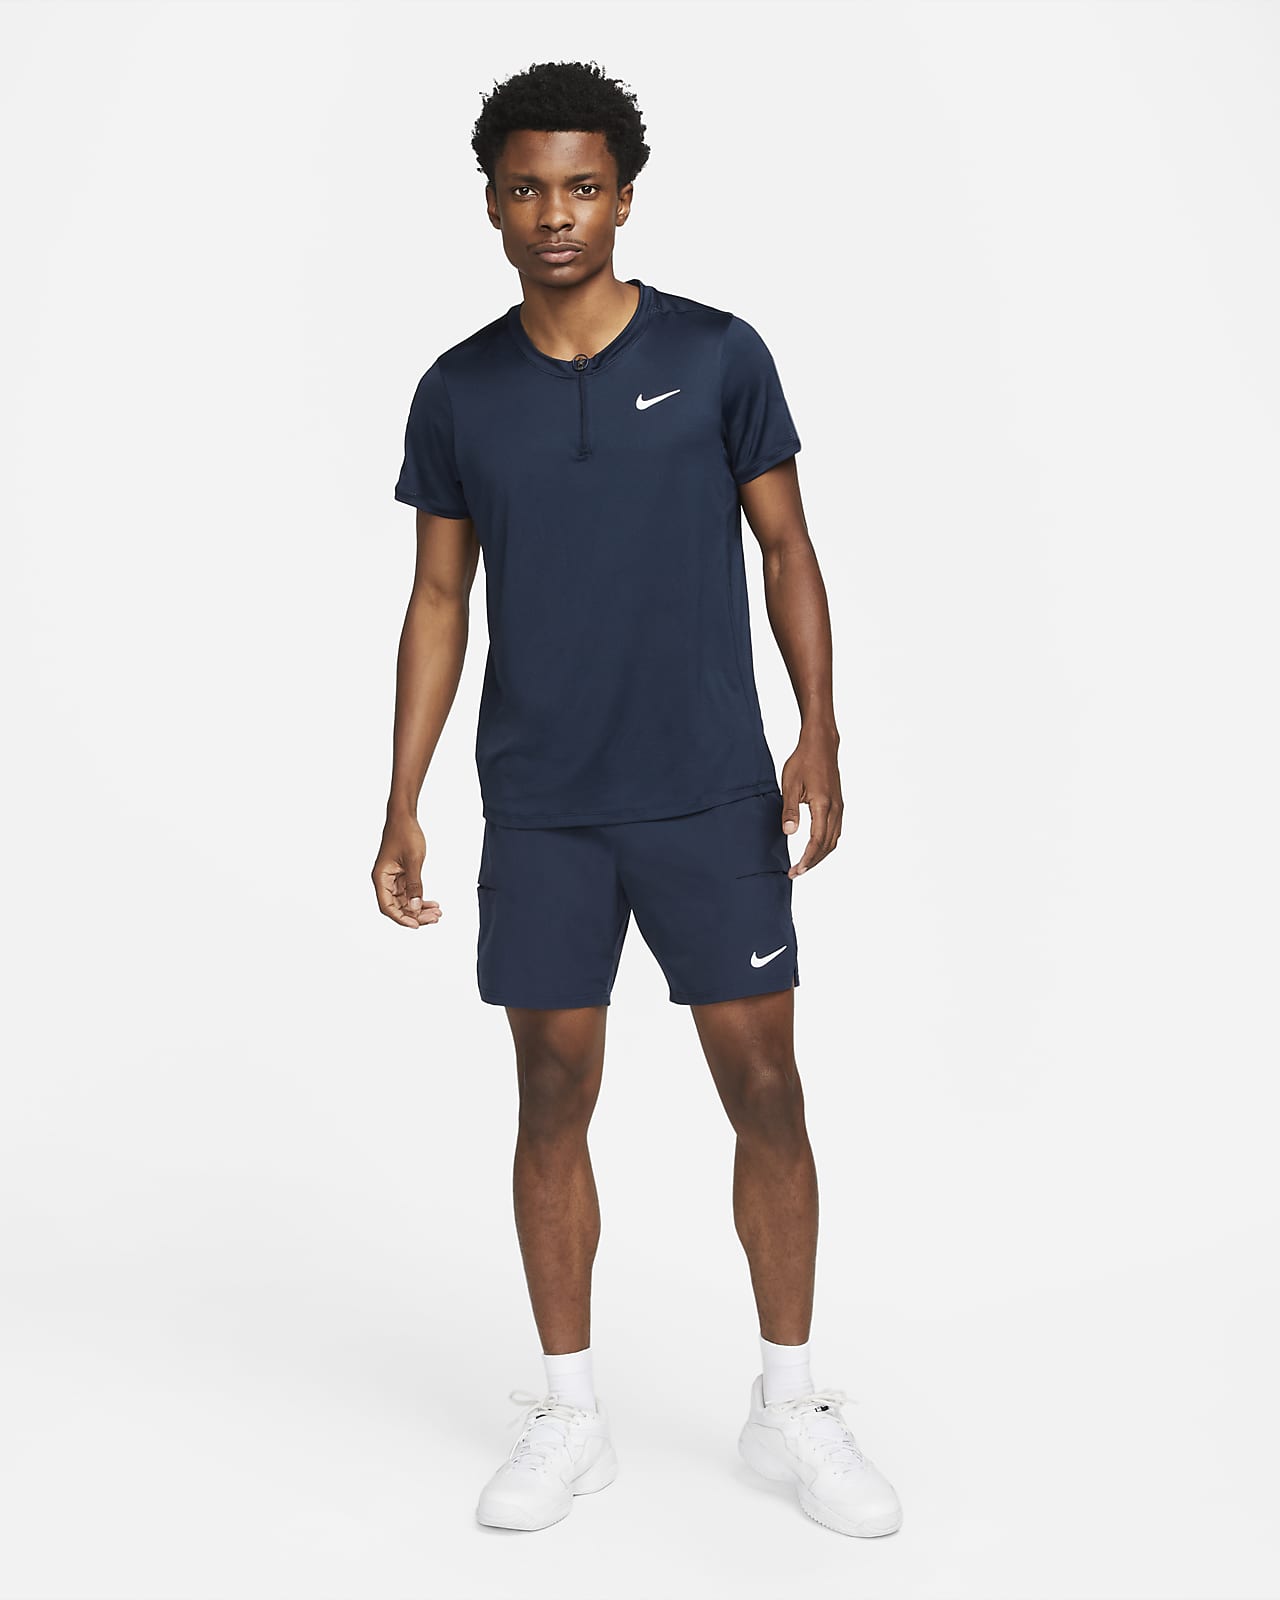 NikeCourt Dri-FIT Advantage Men's Tennis Polo. Nike HR